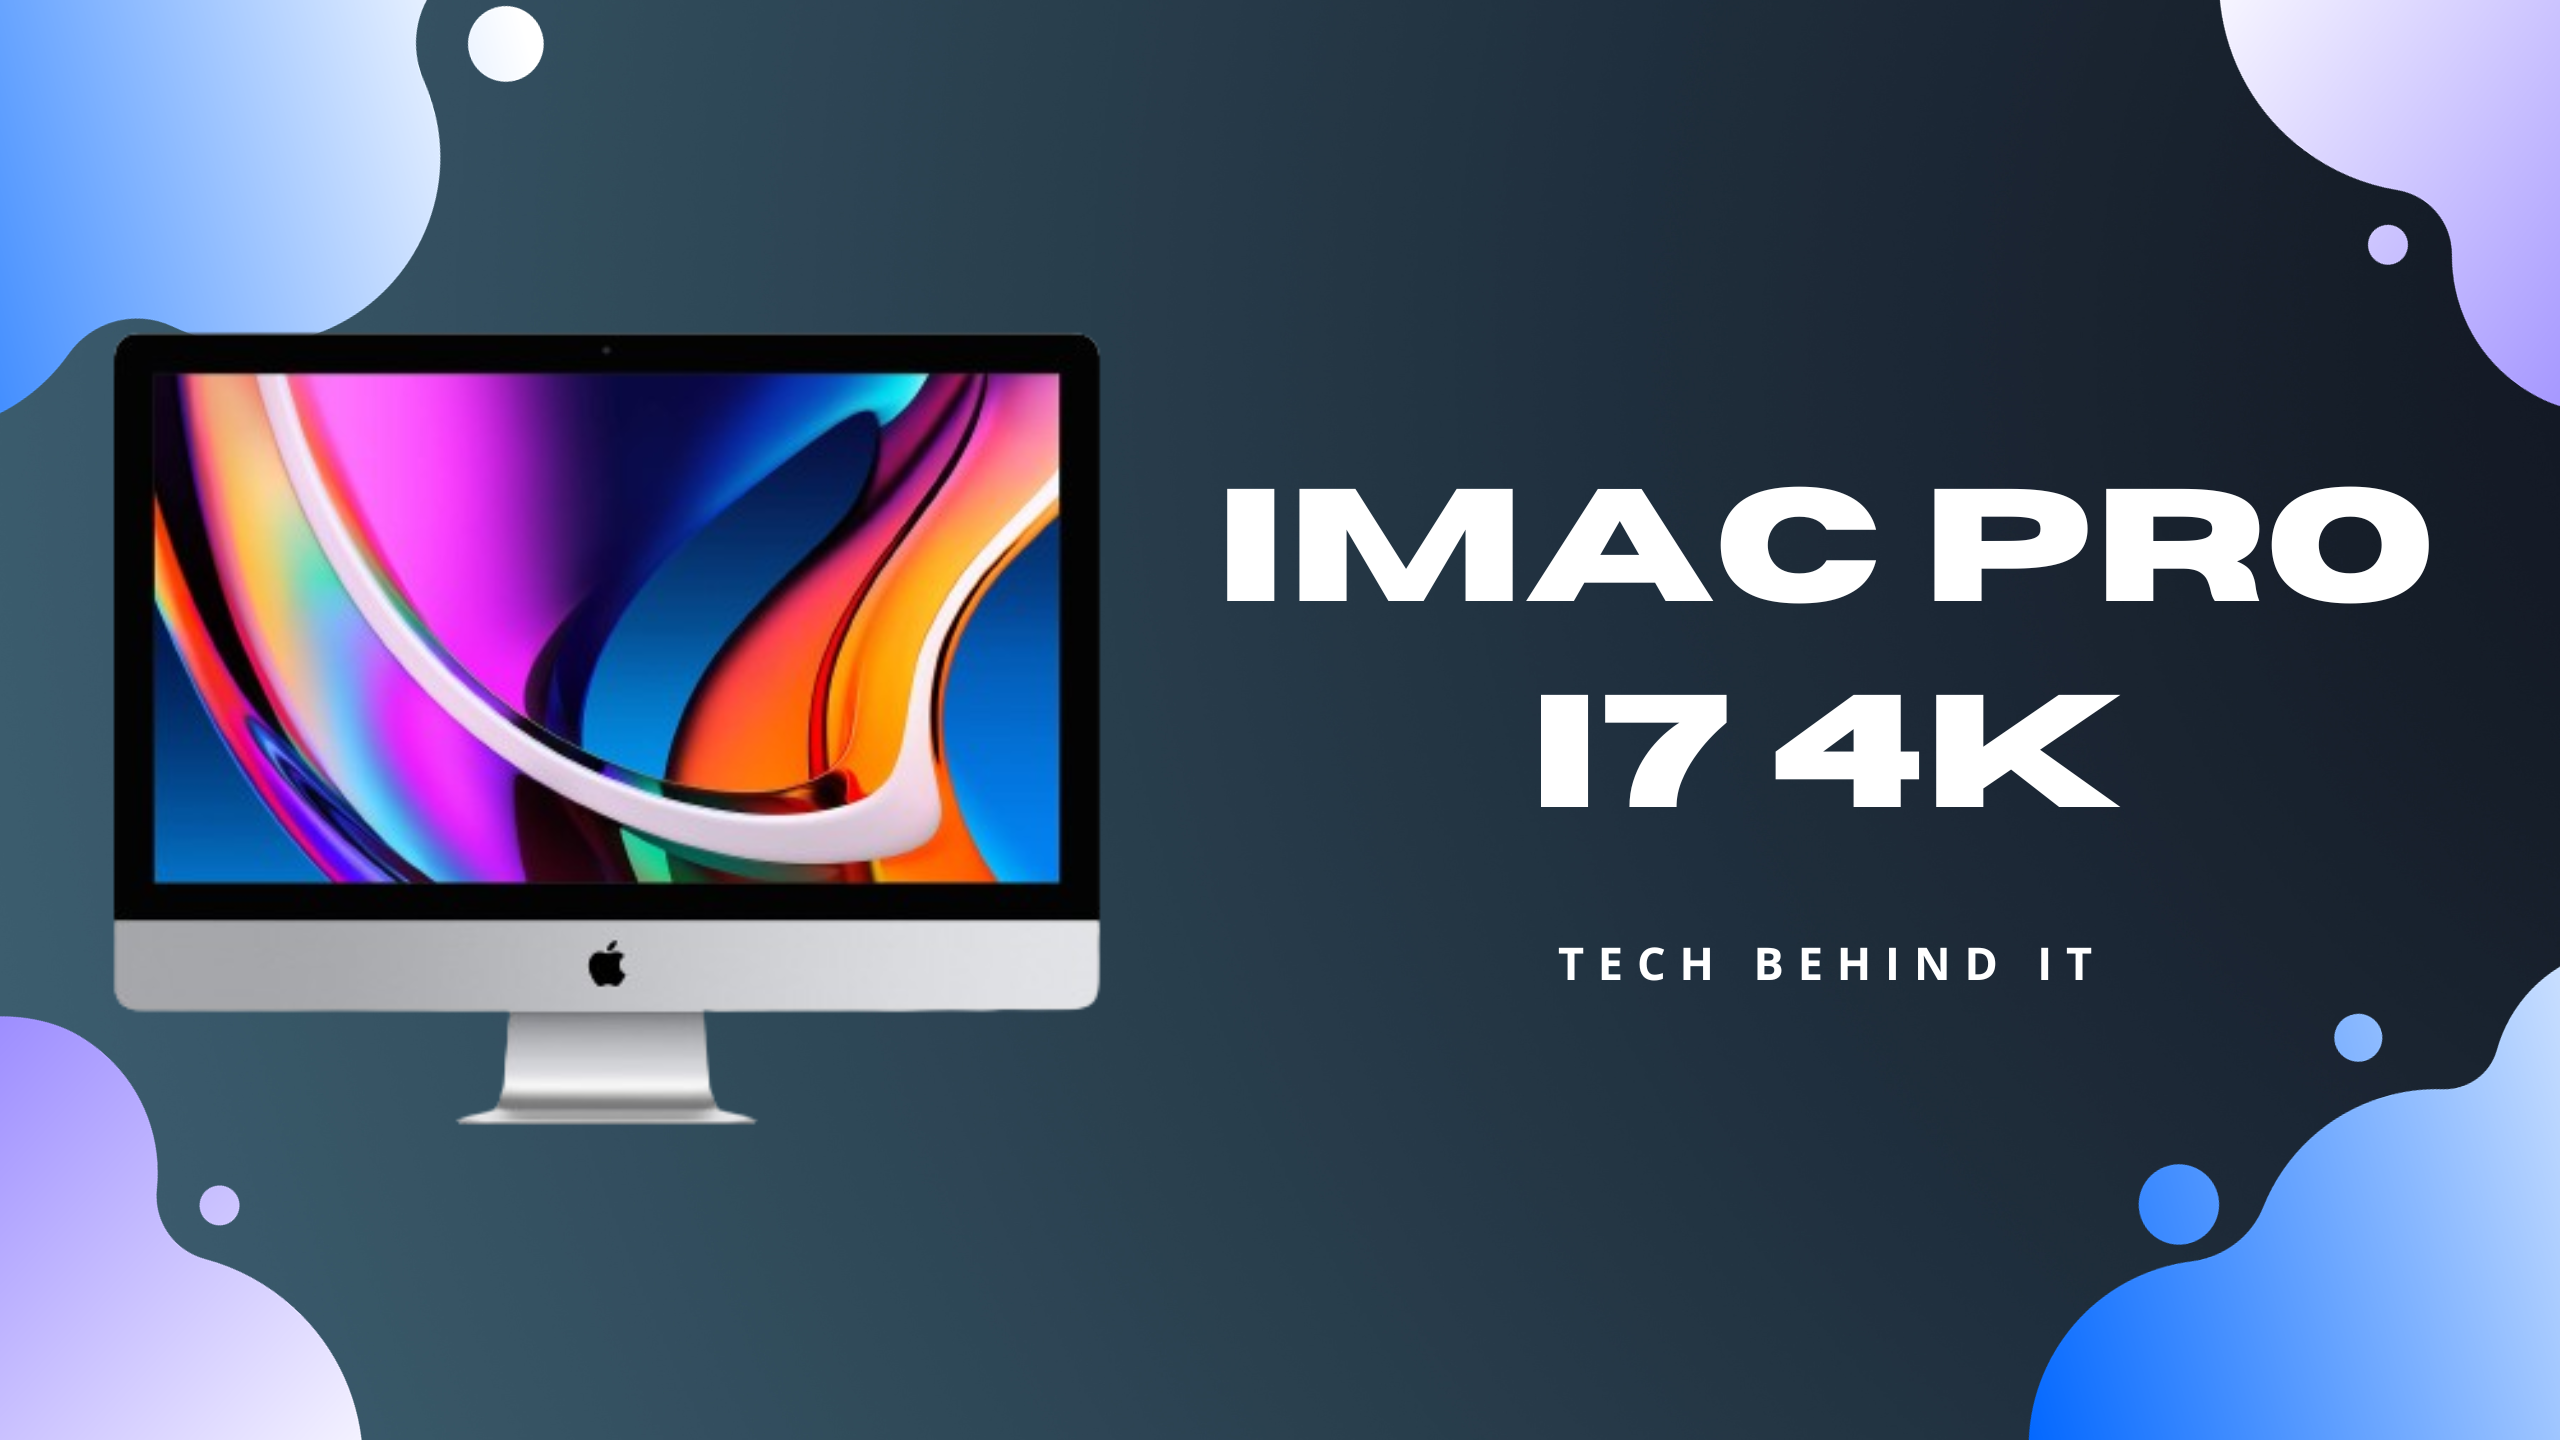 iMac Pro I7 4k – Detailed Review